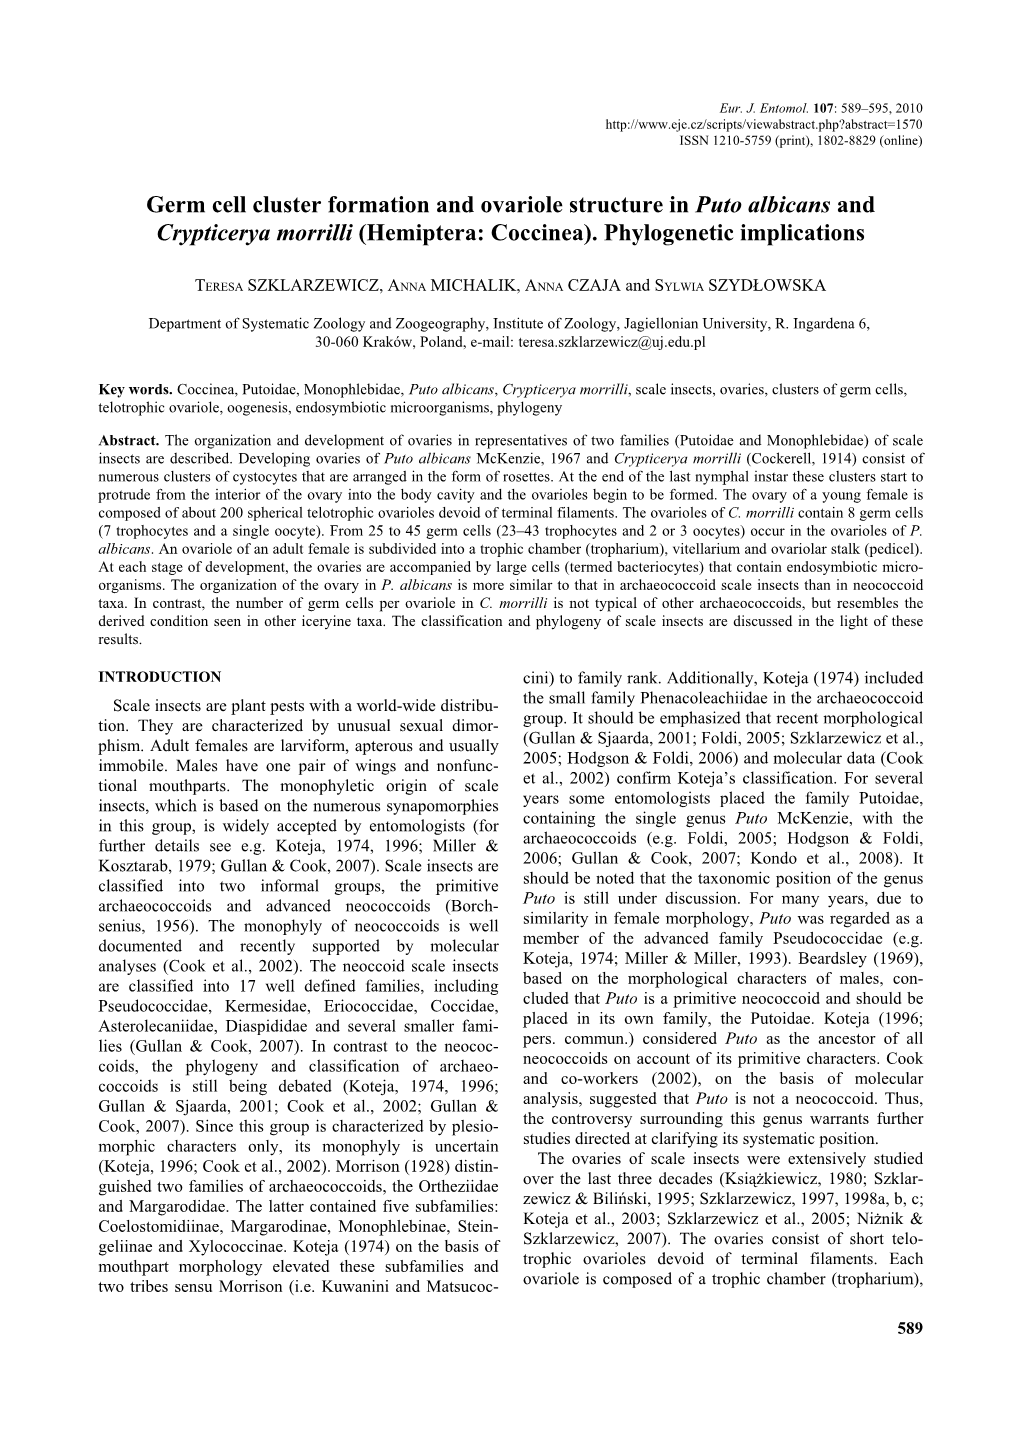 (Hemiptera: Coccinea). Phylogenetic Implications